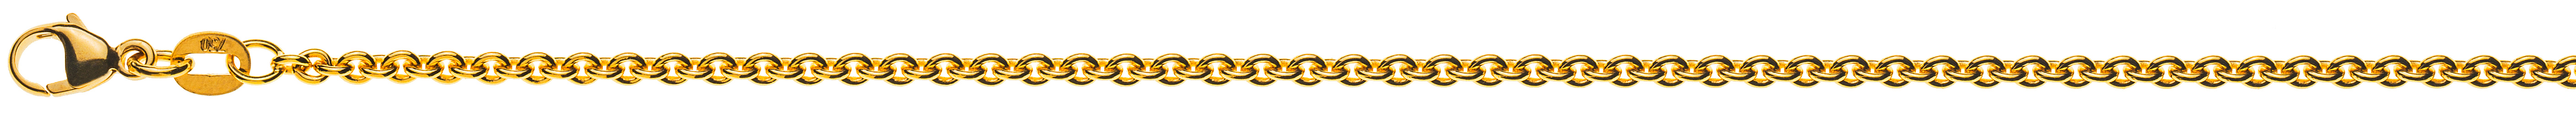 AURONOS Prestige Necklace Yellow Gold 18K Round Anchor 45cm 2.3mm